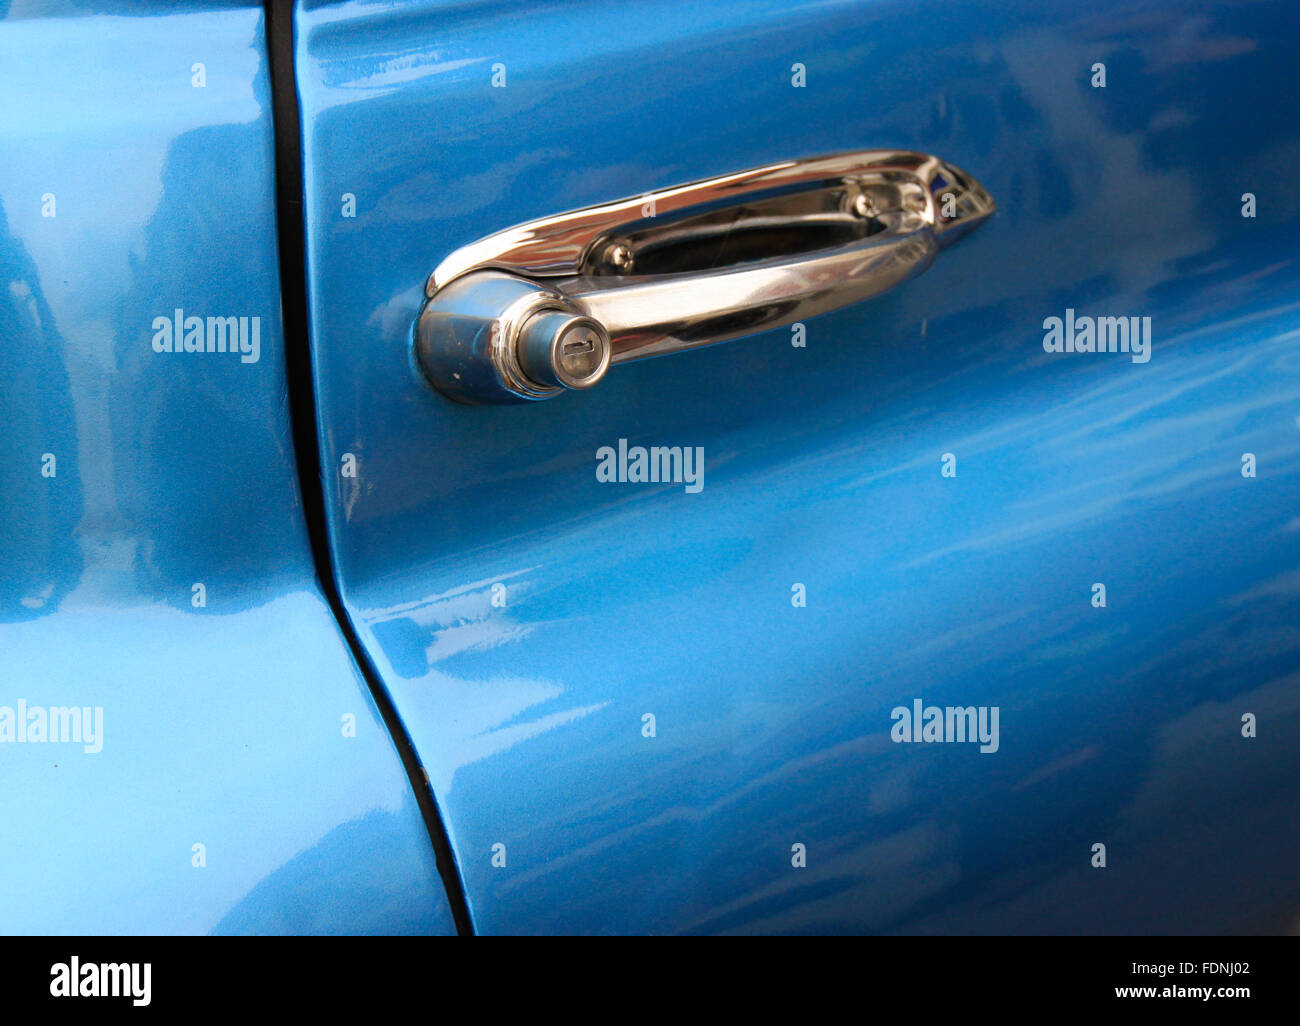 https://c8.alamy.com/compde/fdnj02/automotive-chrom-turgriff-metallic-blau-americana-abholen-der-1950er-jahre-fdnj02.jpg